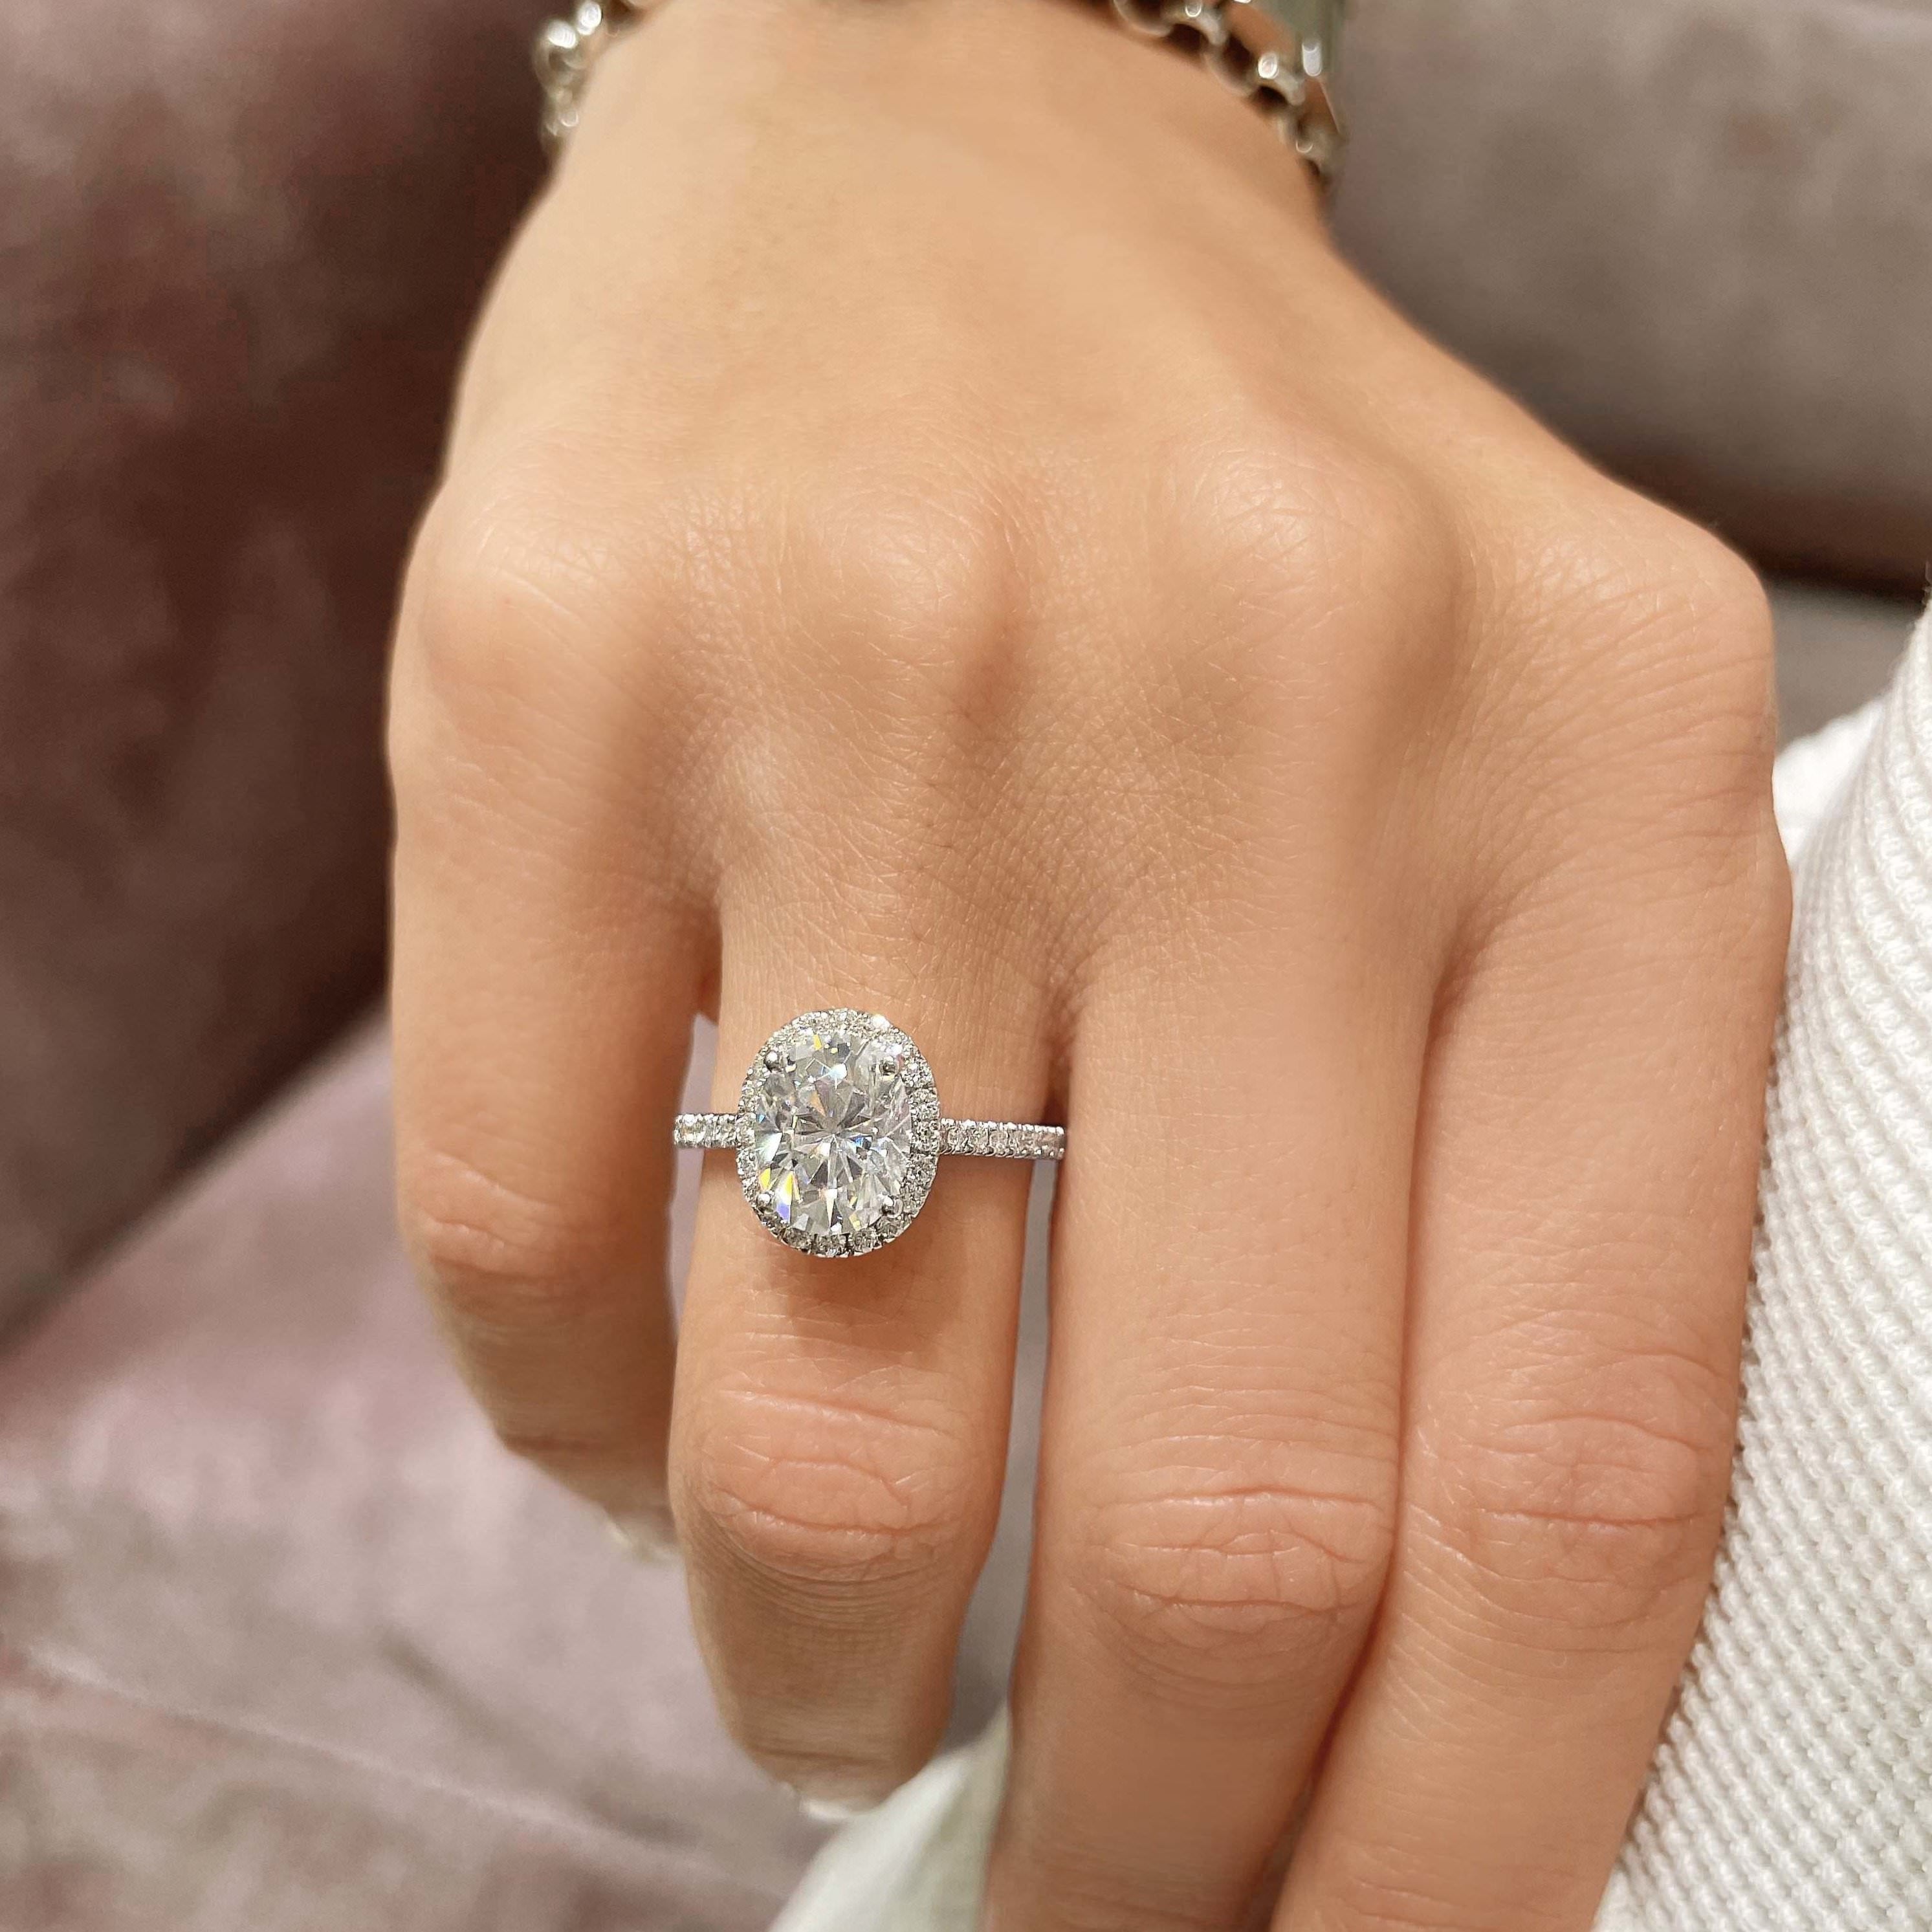 Maria Moissanite & Diamonds Ring -18K White Gold